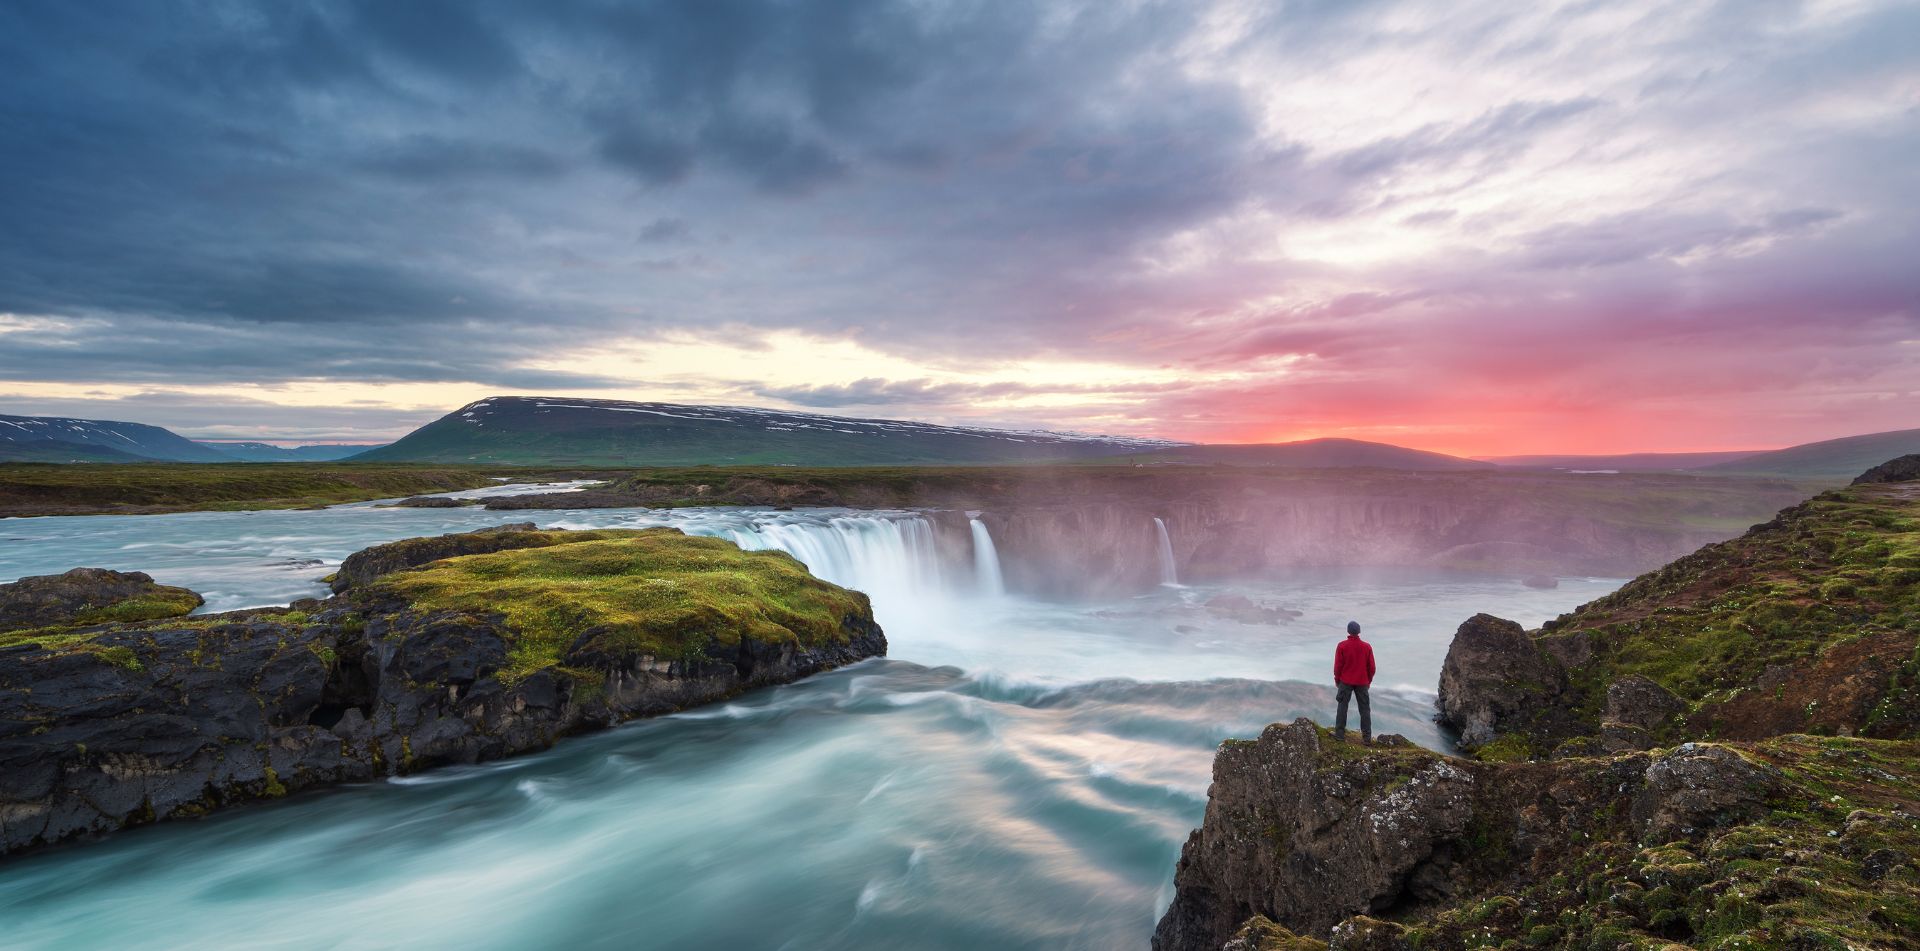 Traveler admiring the stunning views in Iceland